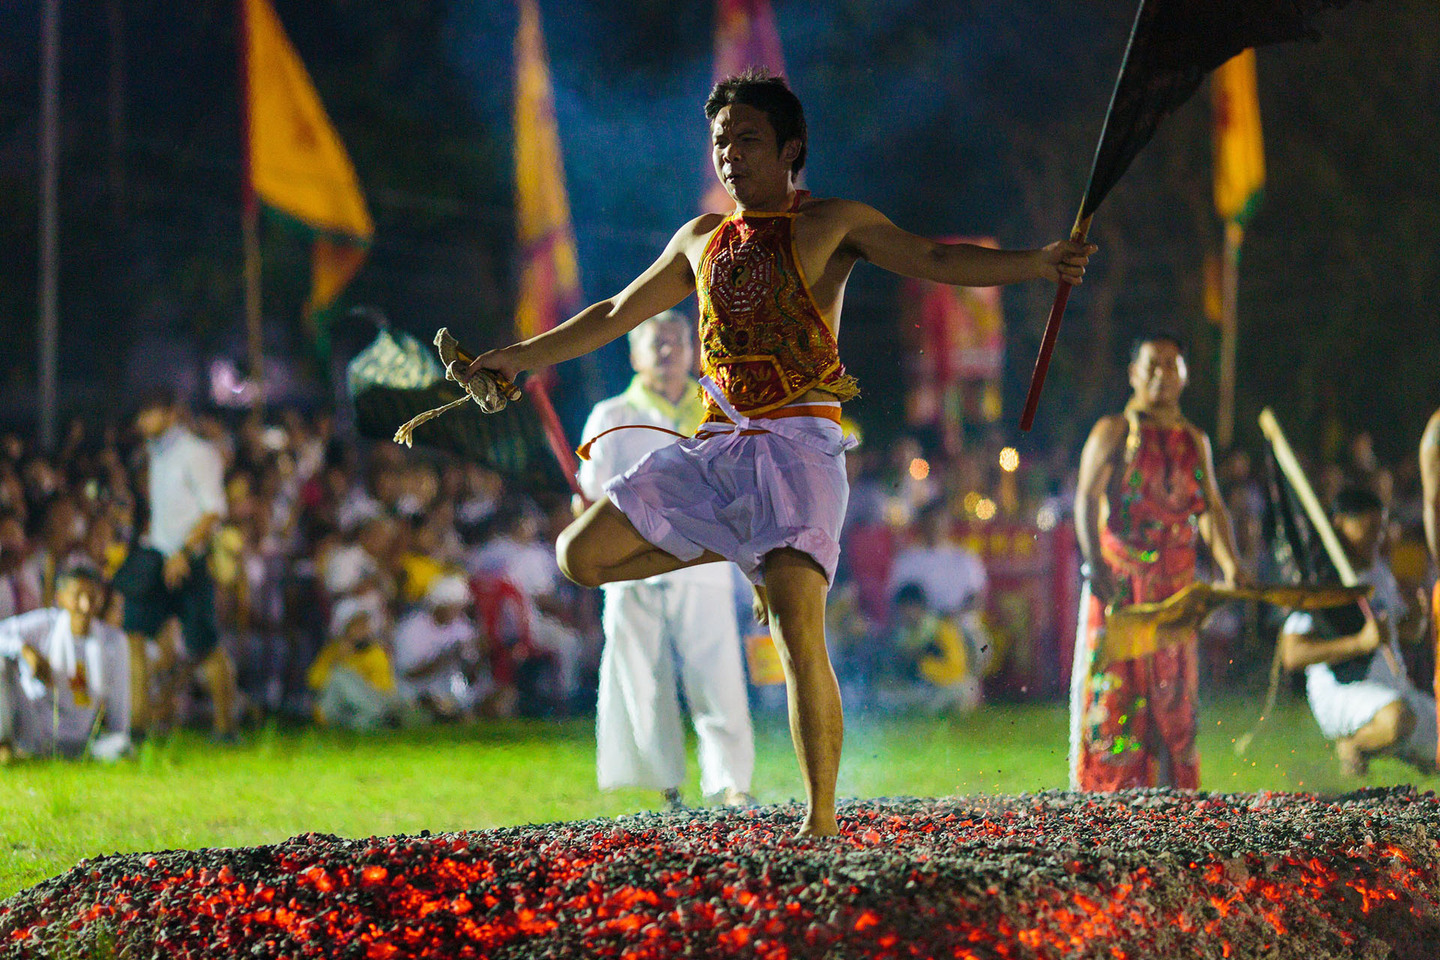 Fire Walking Ritual performed at Phuket Vegetarian Festival